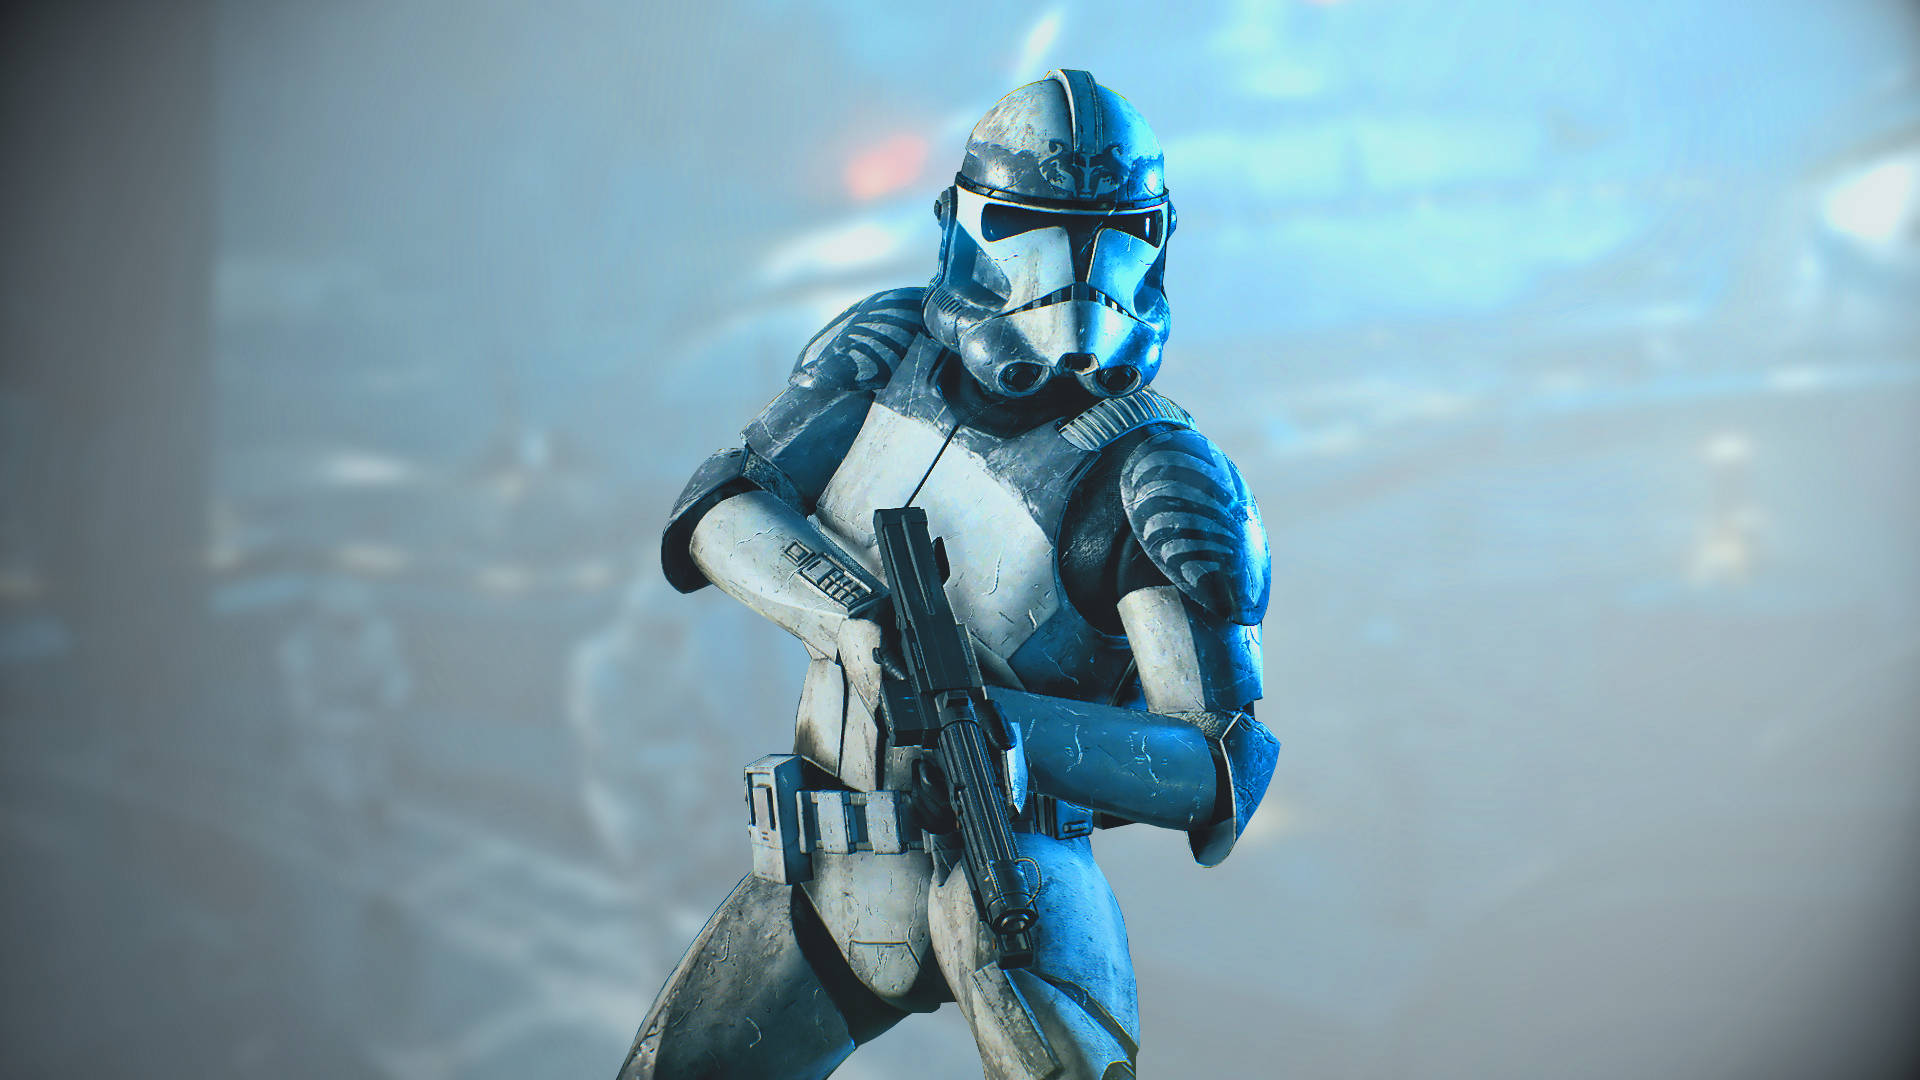 A Fierce Clone Trooper Exploring A Star Wars Raid Wallpaper